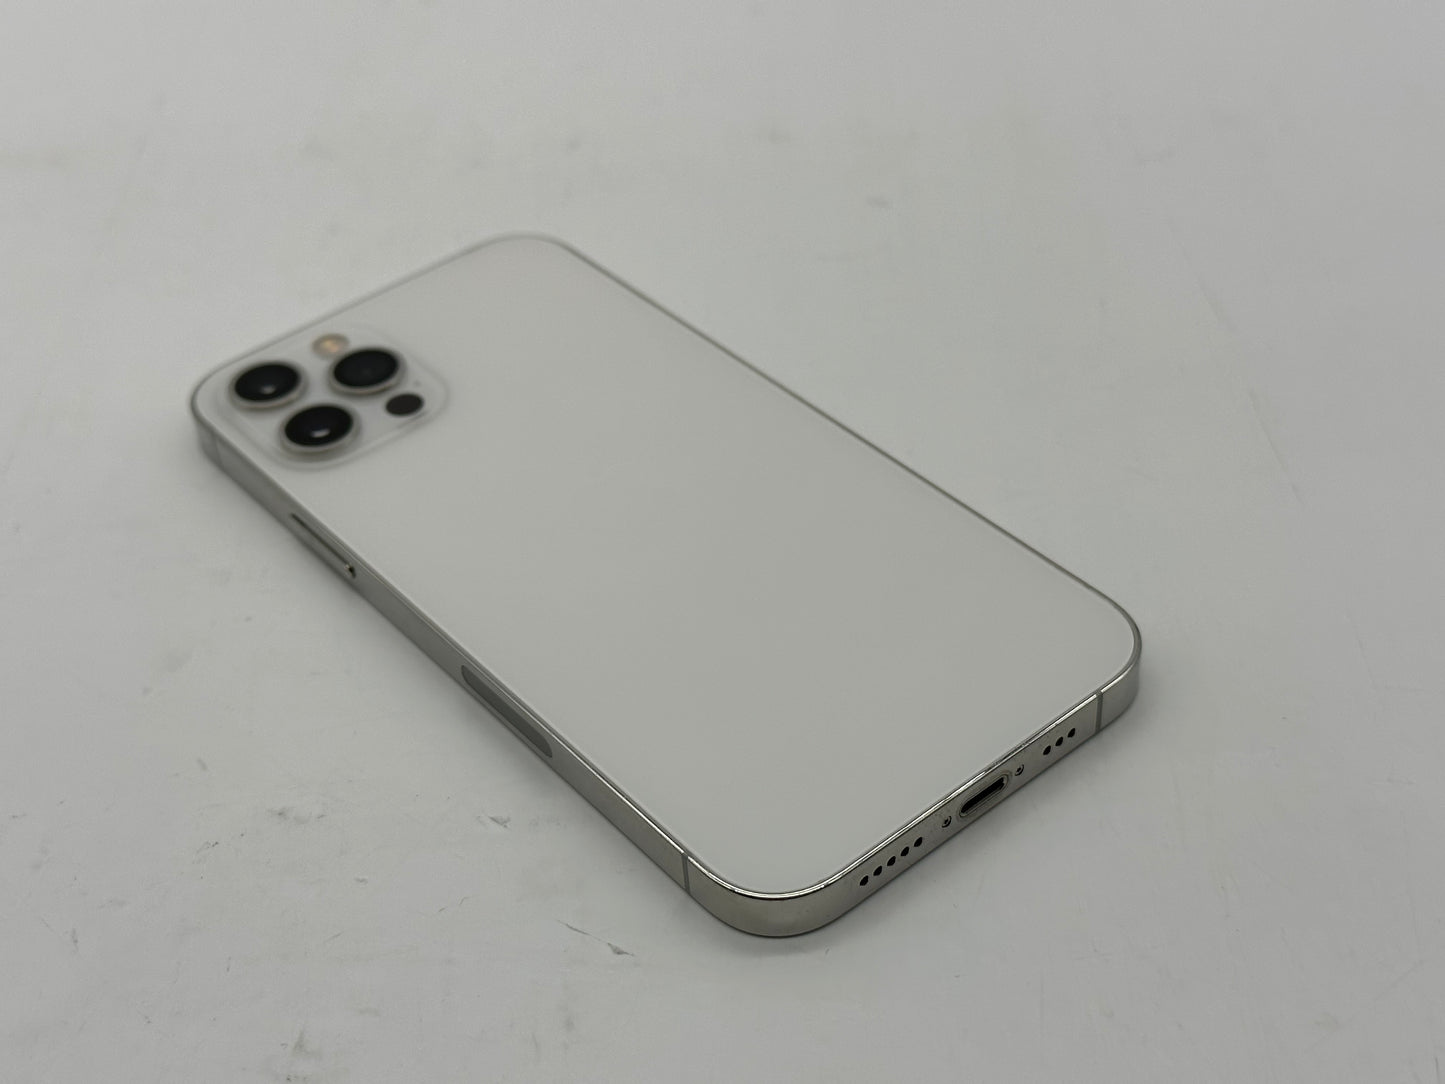 Apple iPhone 12 Pro GSM/CDMA Unlocked 256GB "Silver"